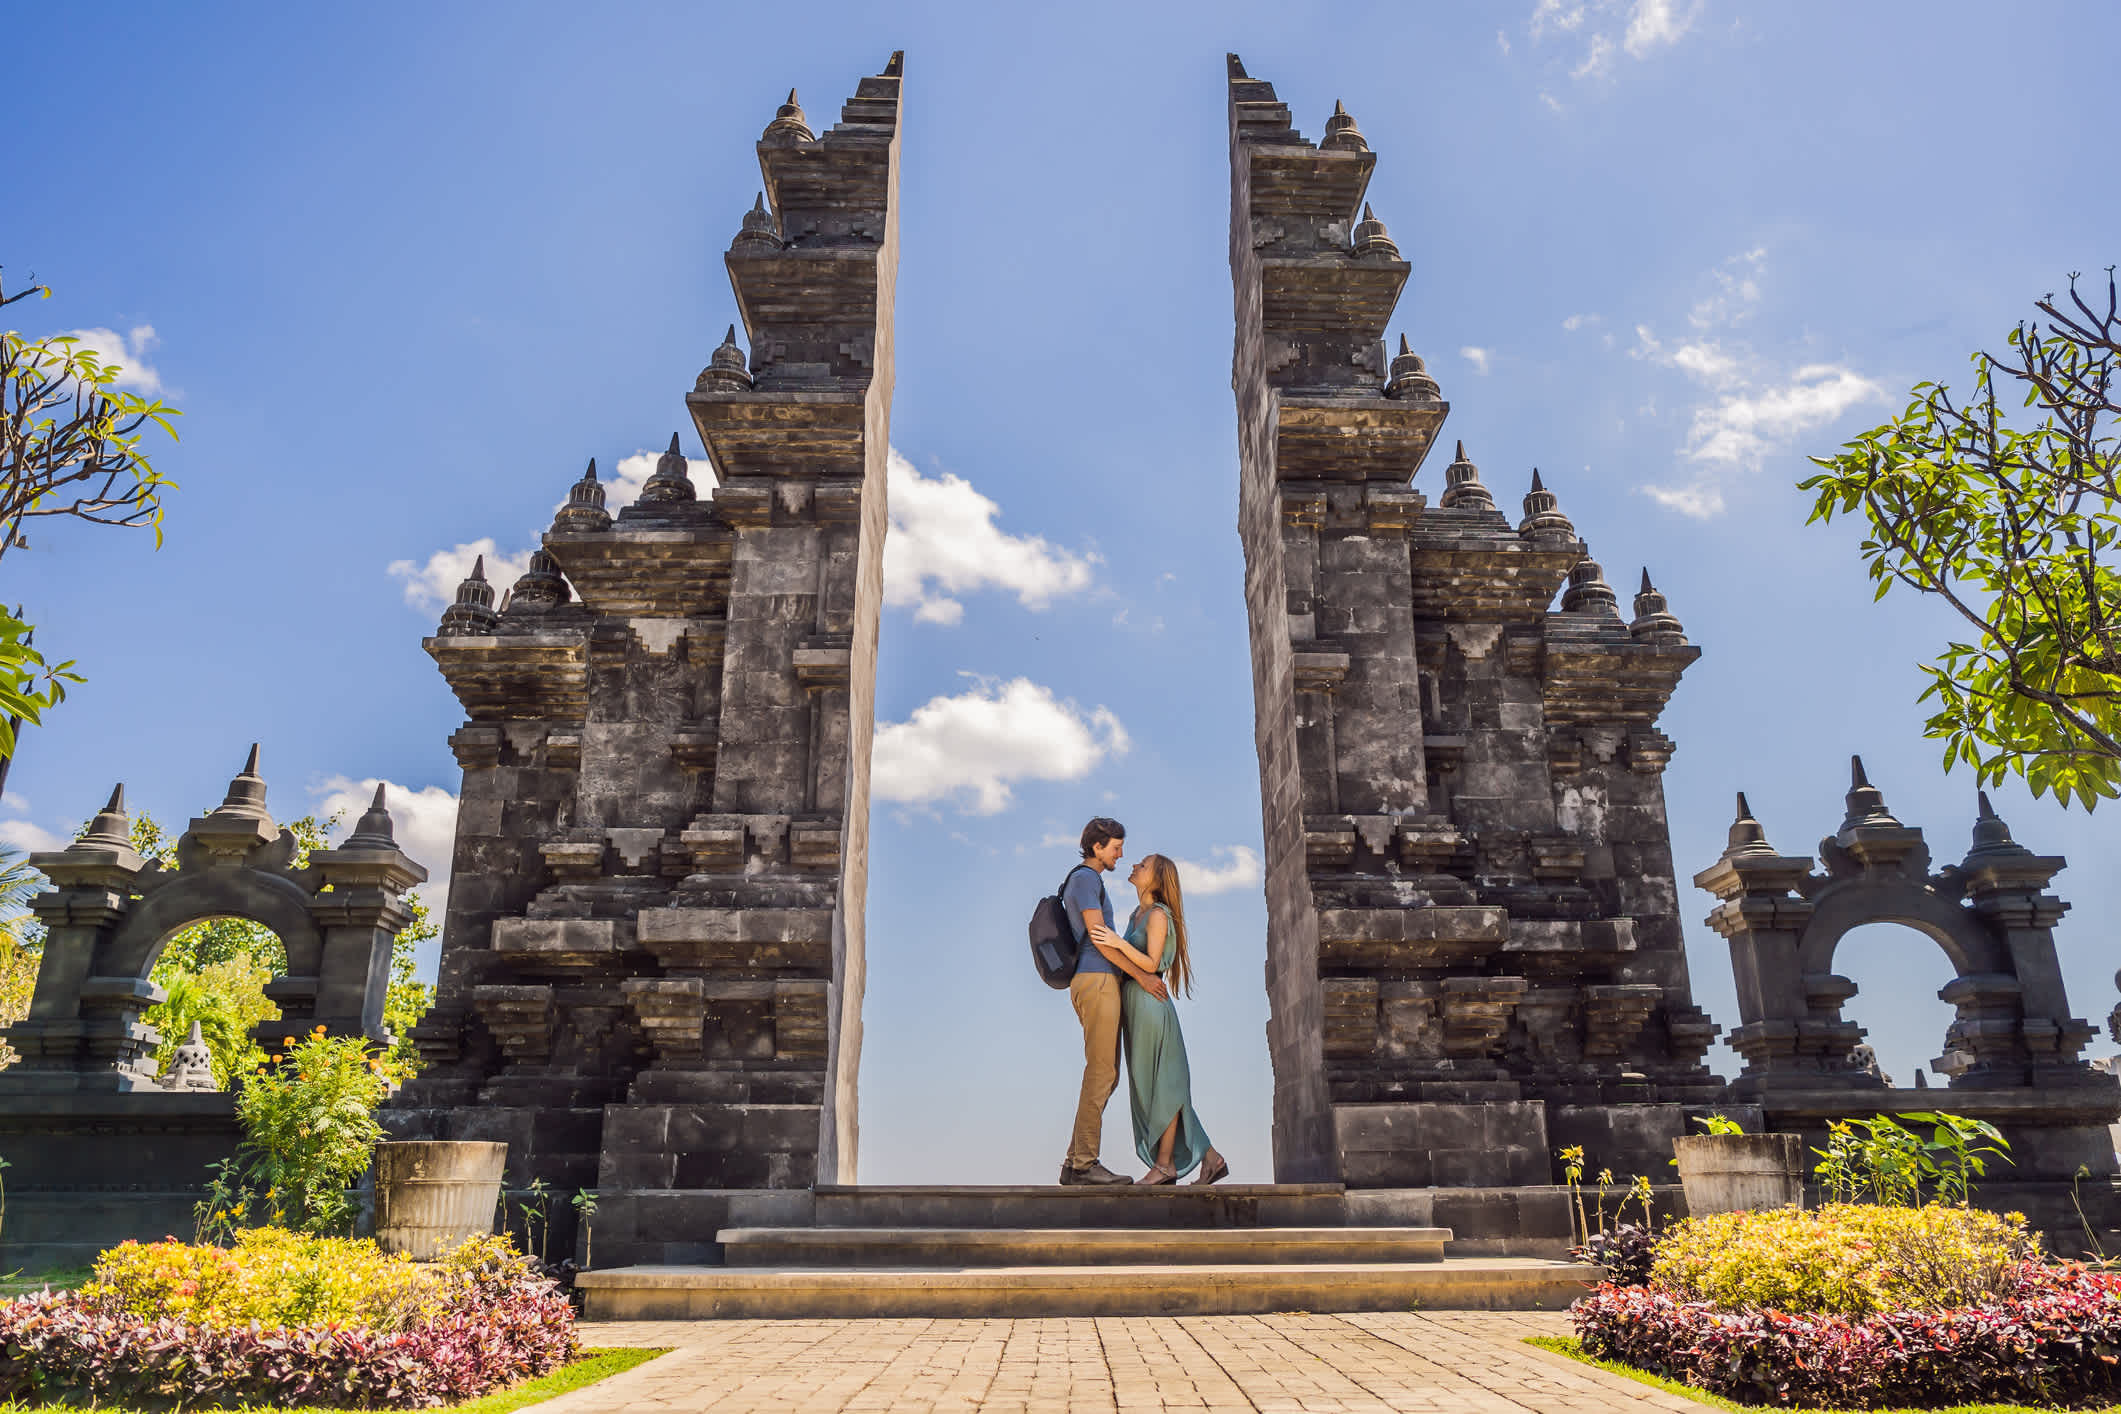 Touristenpaare im Tempel Brahma Vihara Arama Banjar Bali, Indonesien.

